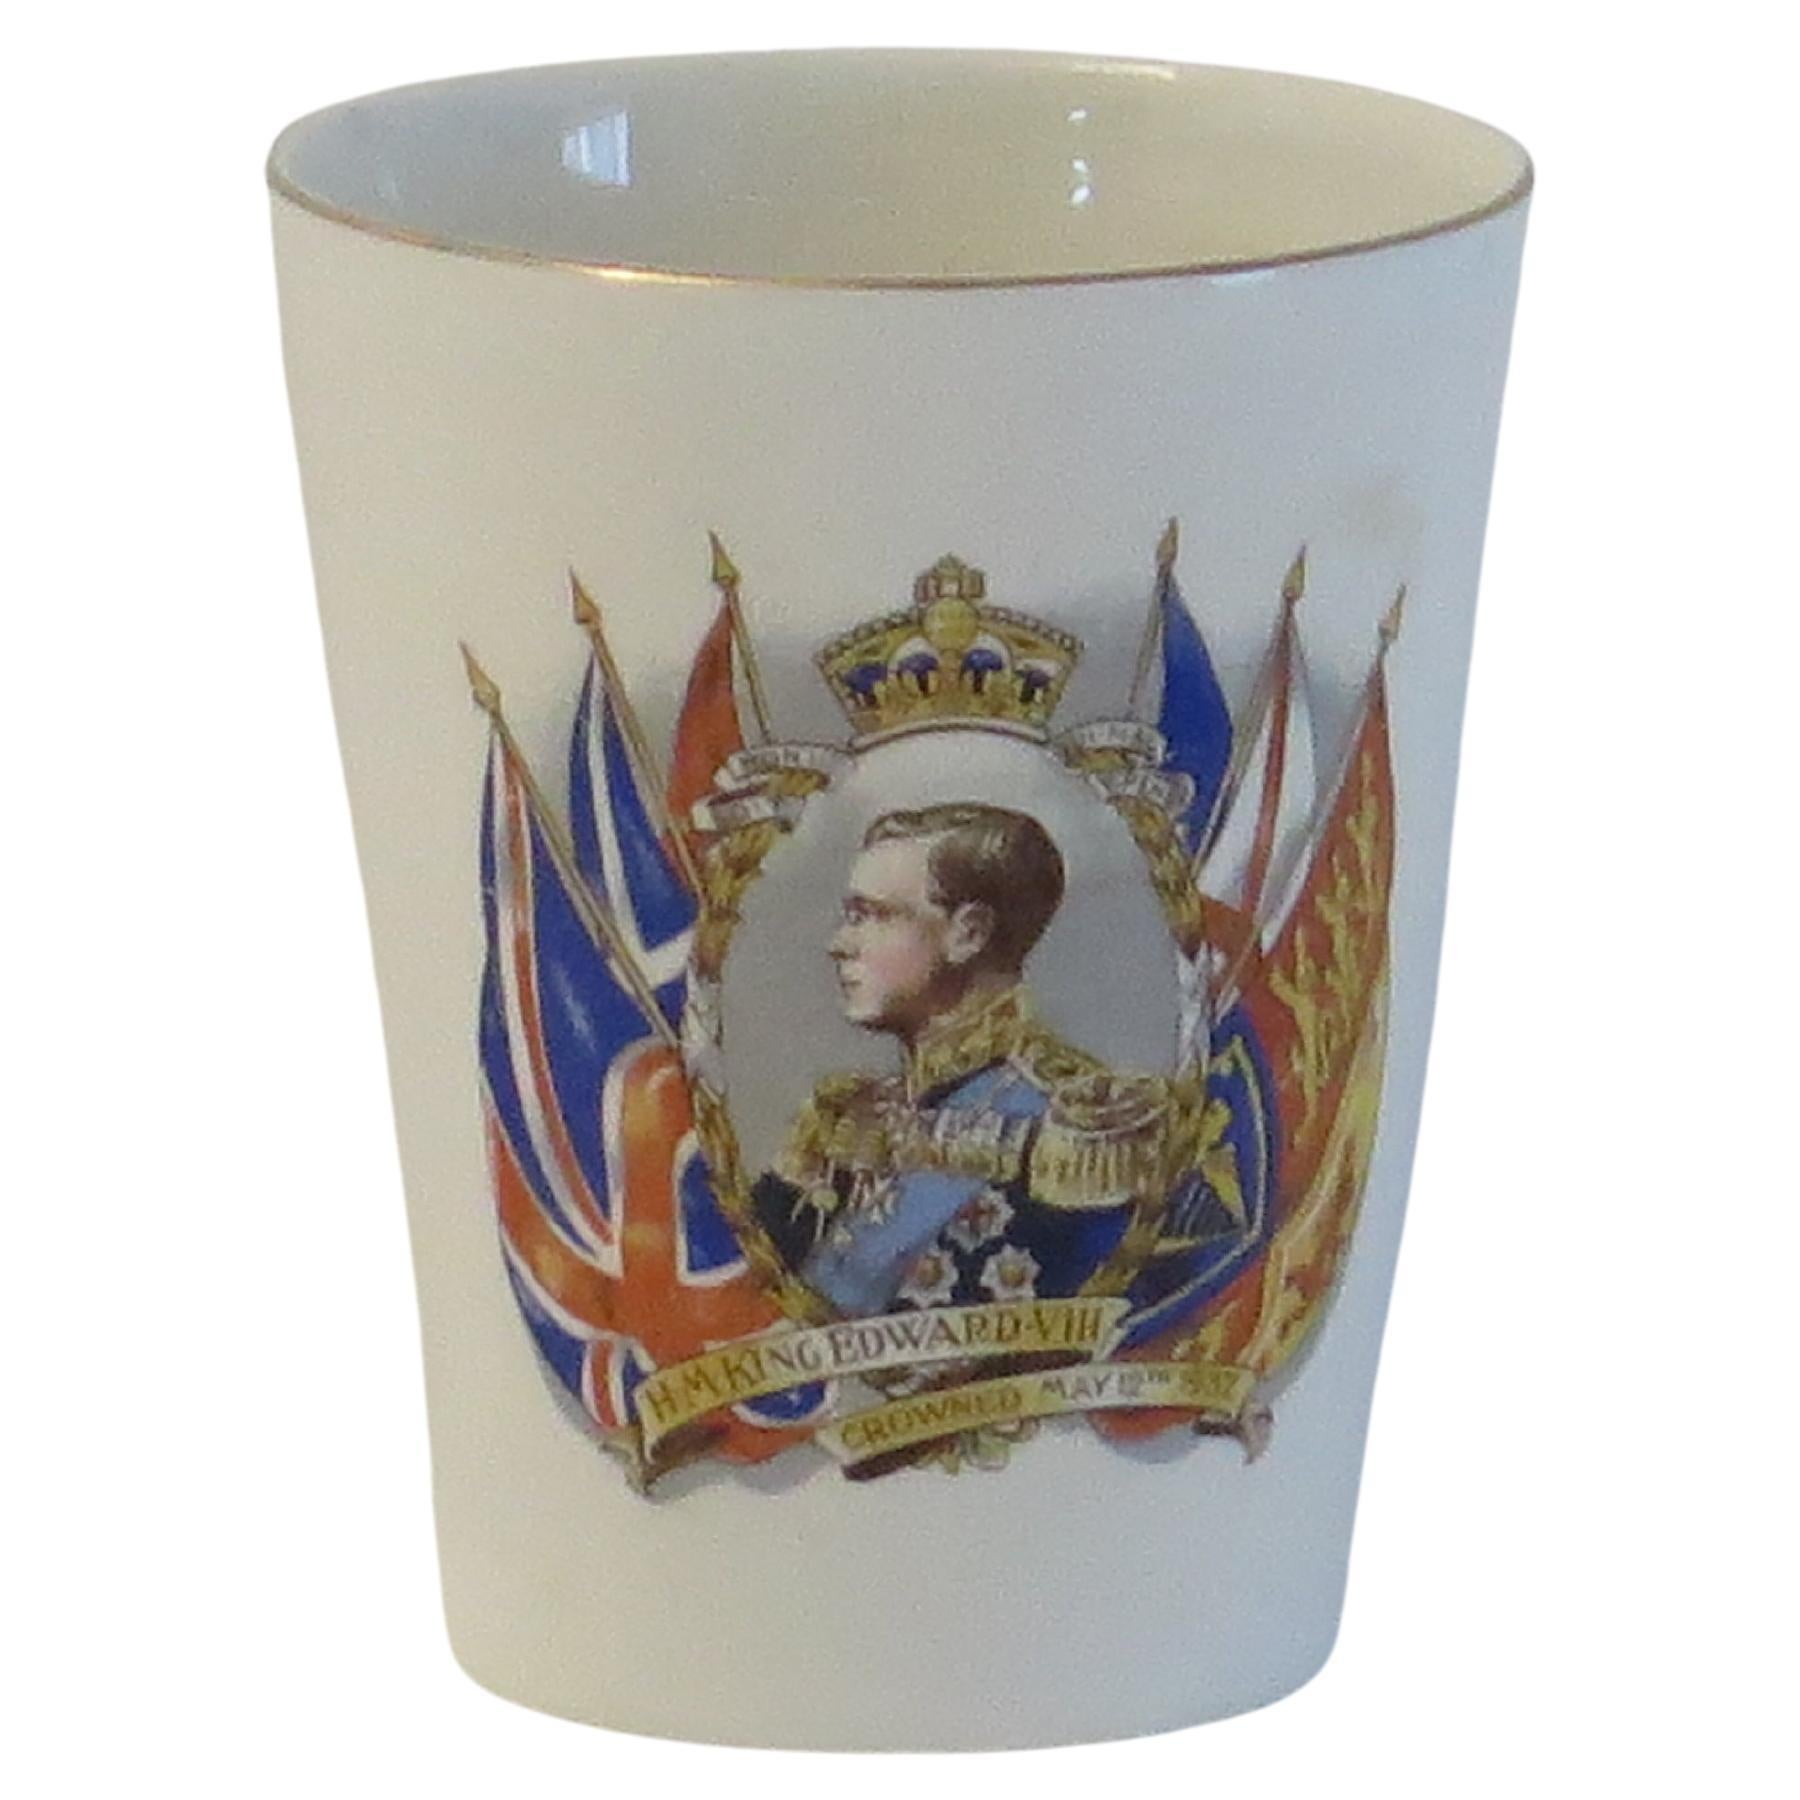 King Edward V111  Royal Commemorative Pottery Beaker, May 12th 1937 For Sale